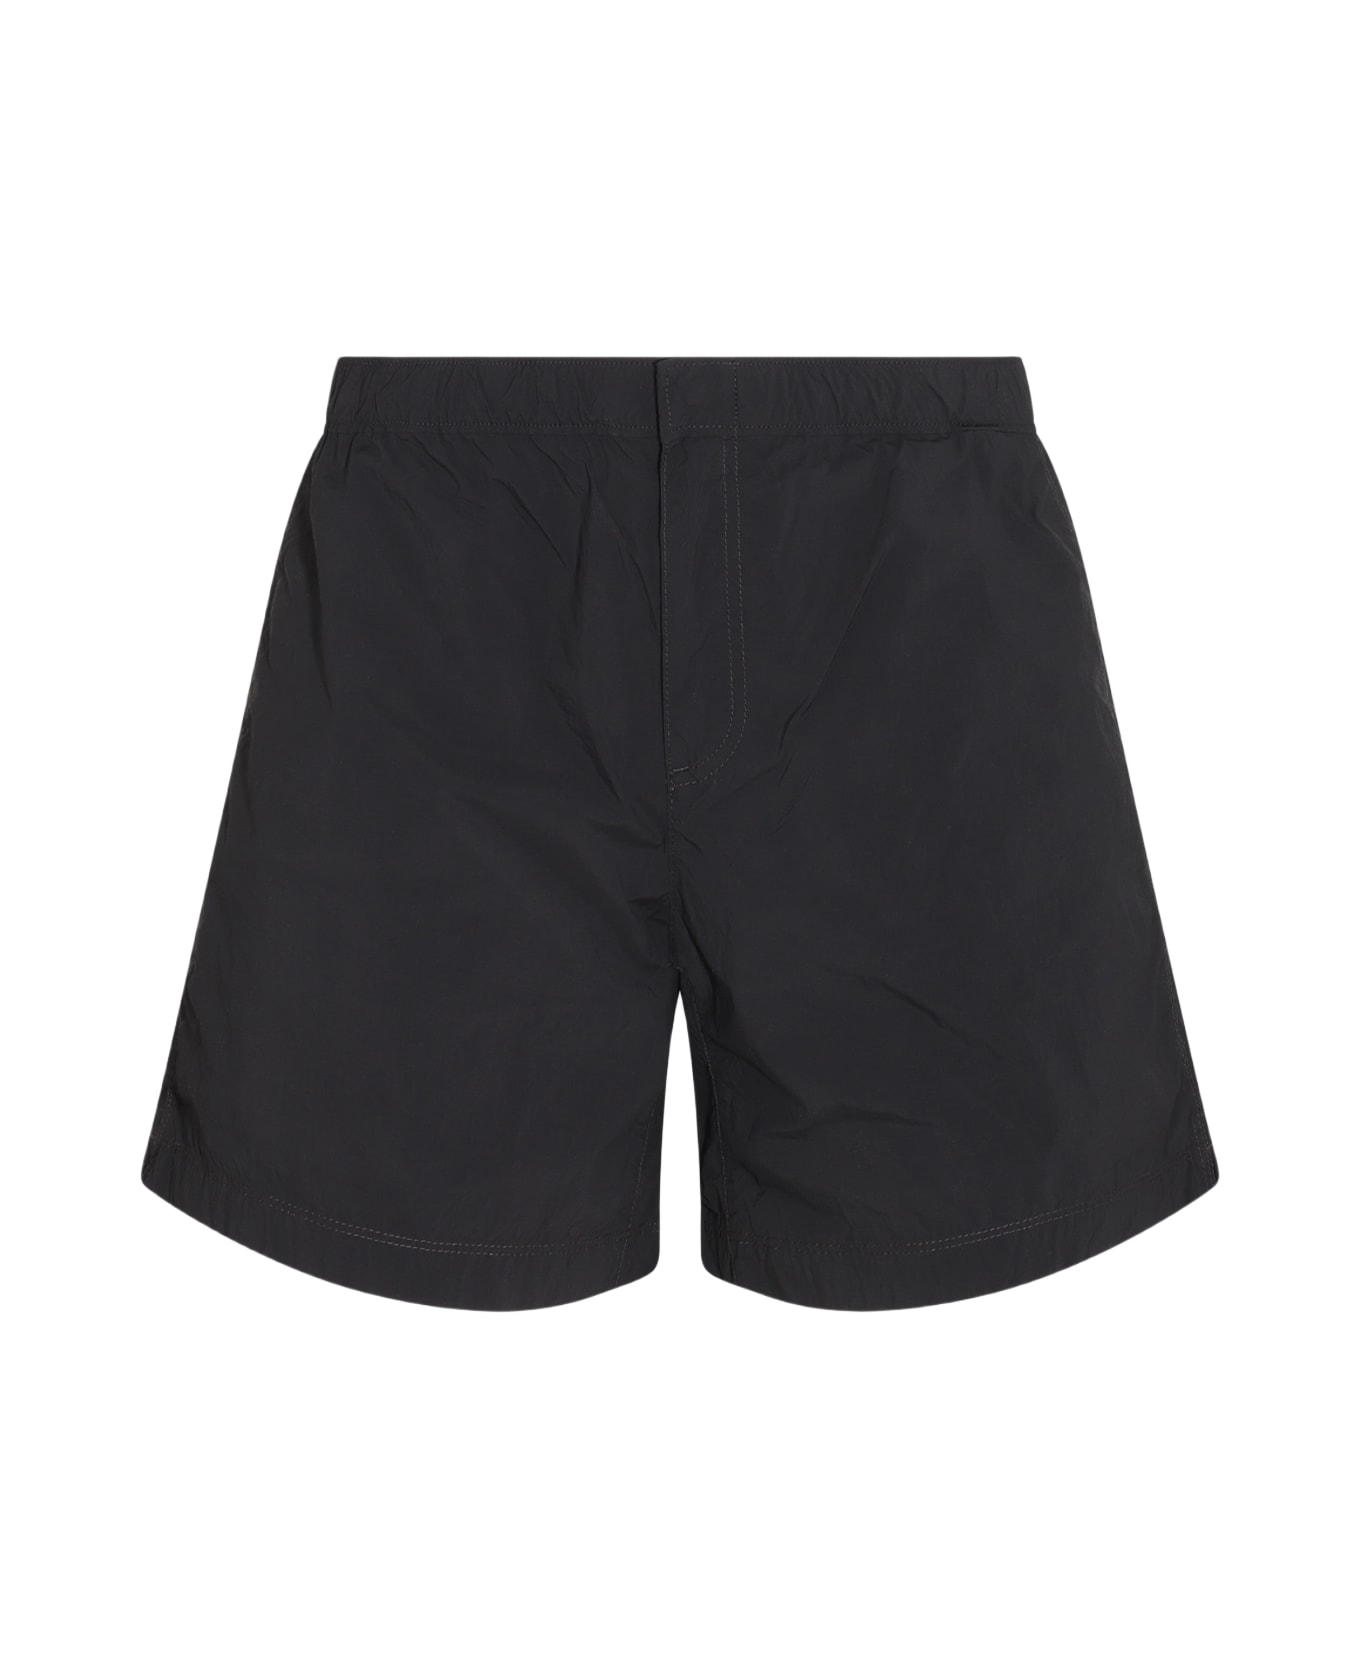 Ten C Black Shorts - Black